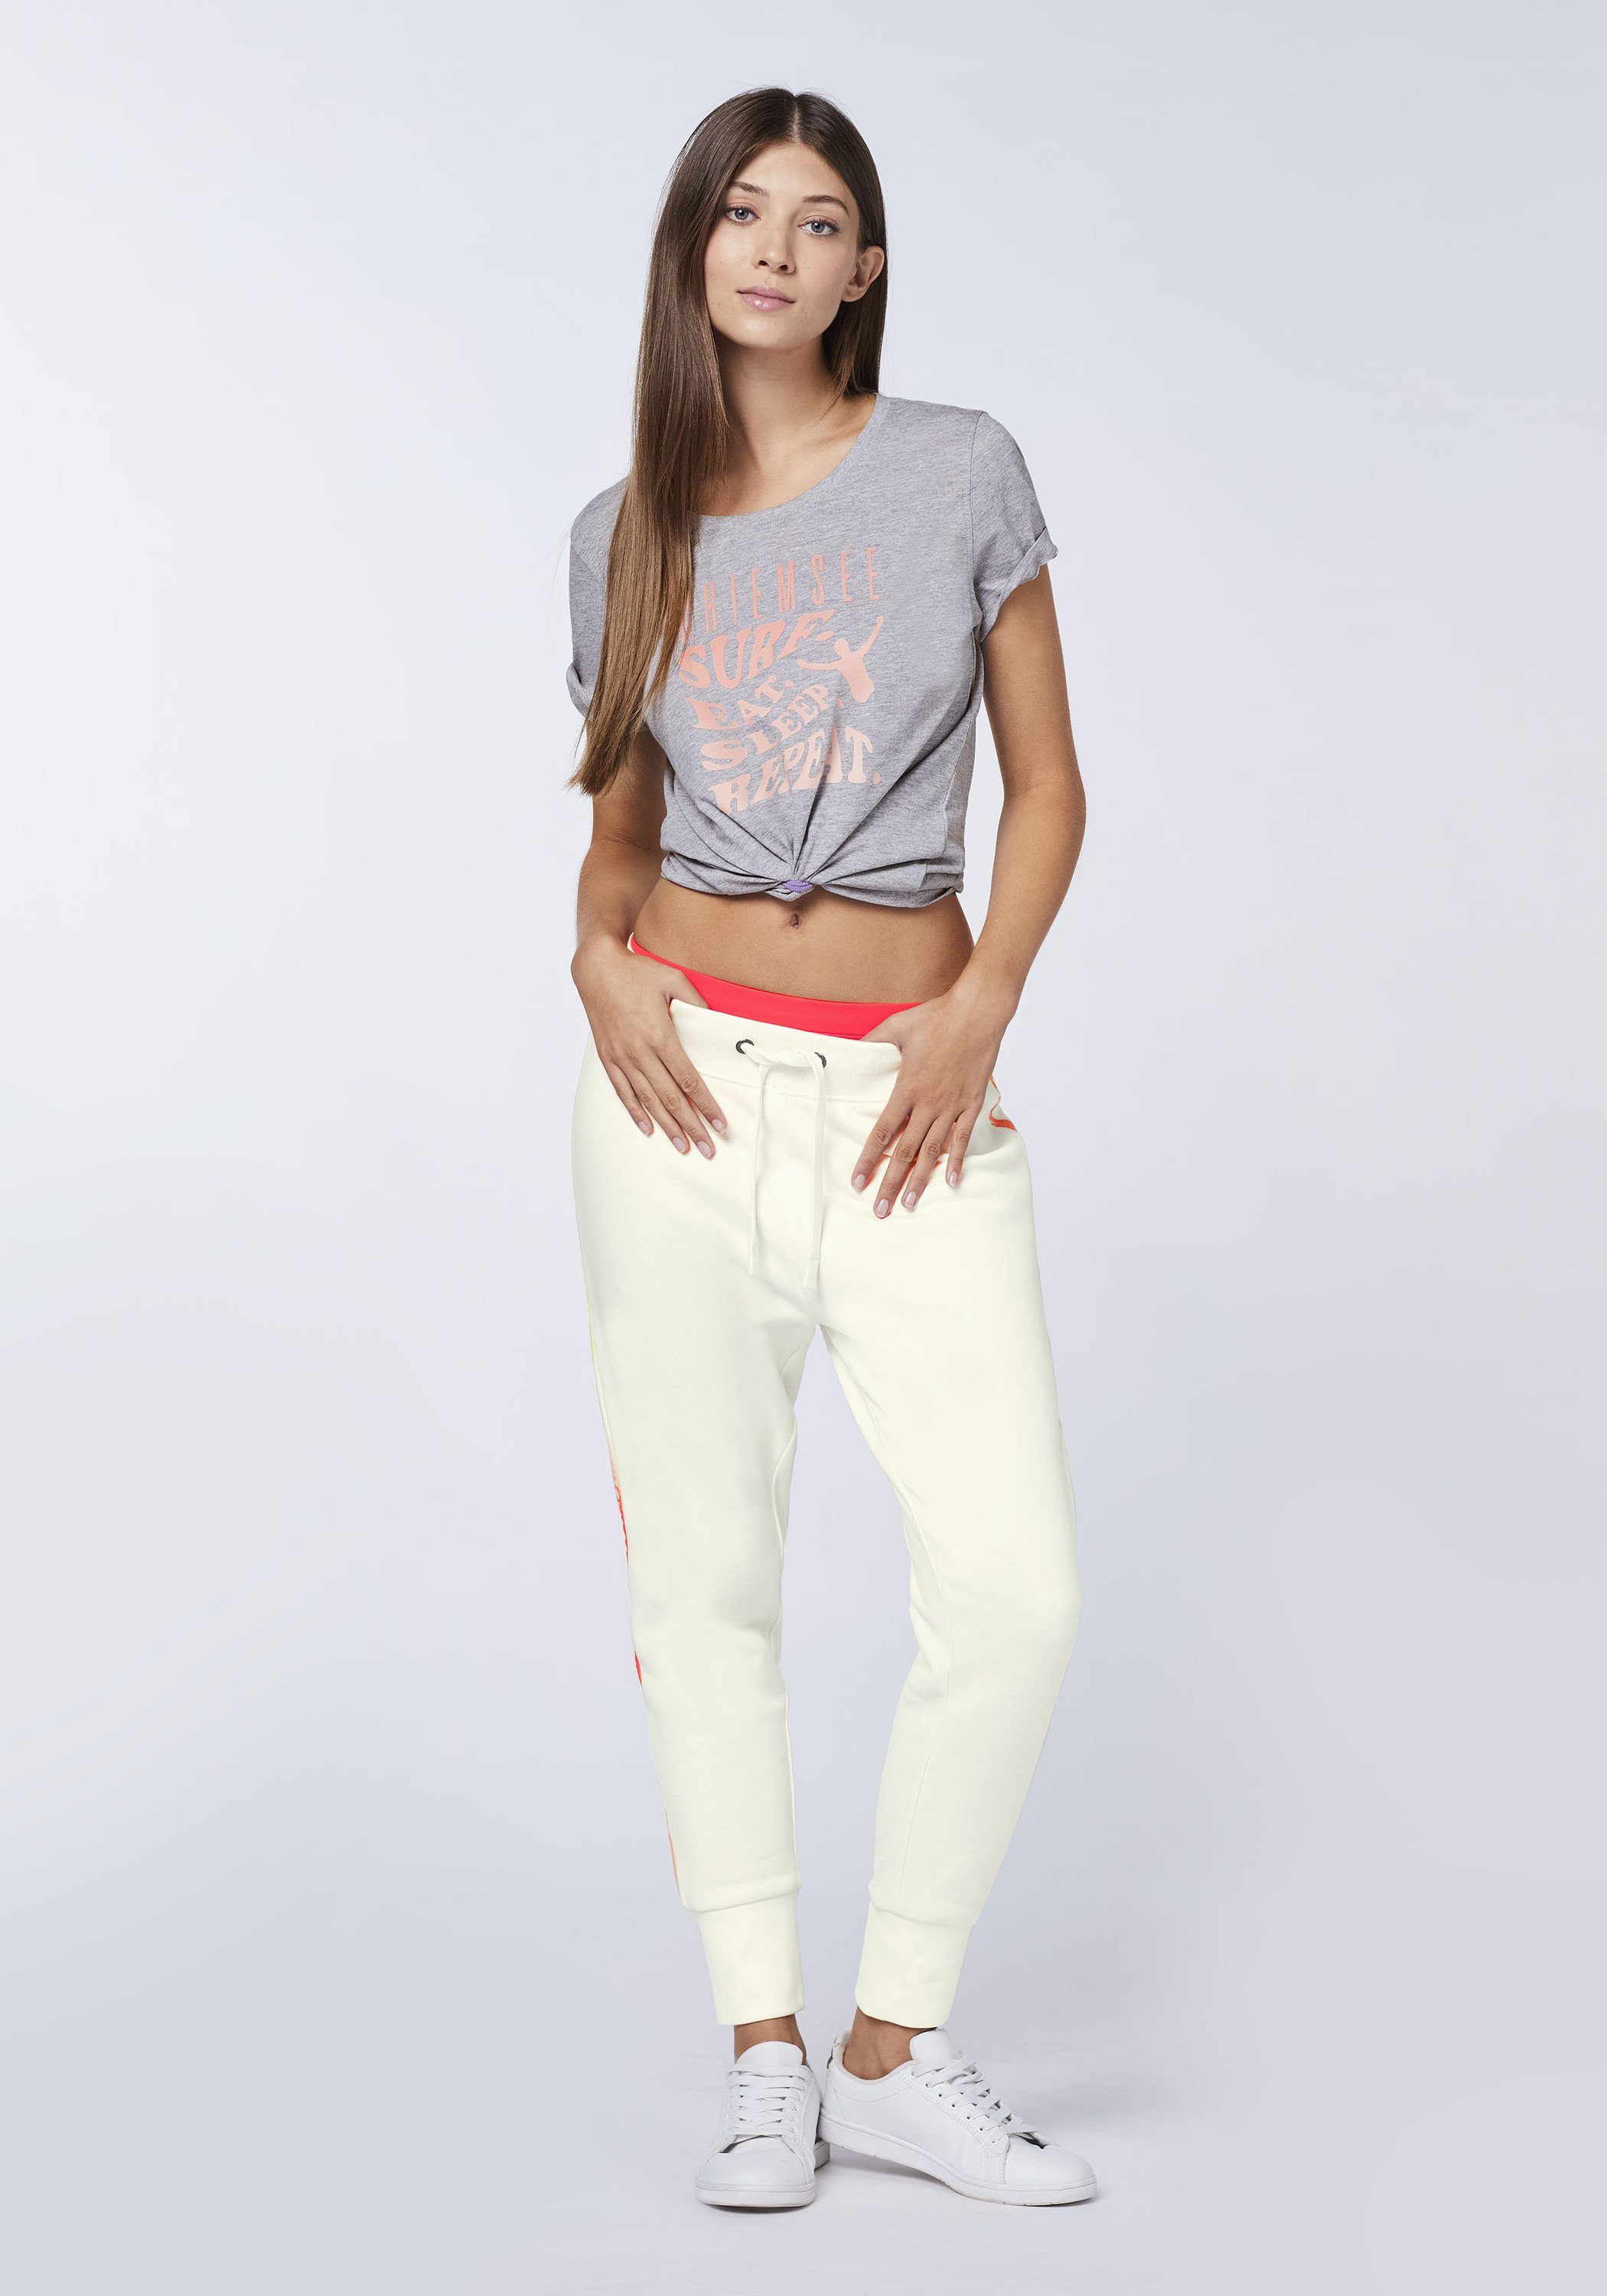 Chiemsee Gray T-Shirt mit Print-Shirt Schriftzug Neutral 1 17-4402M Melange